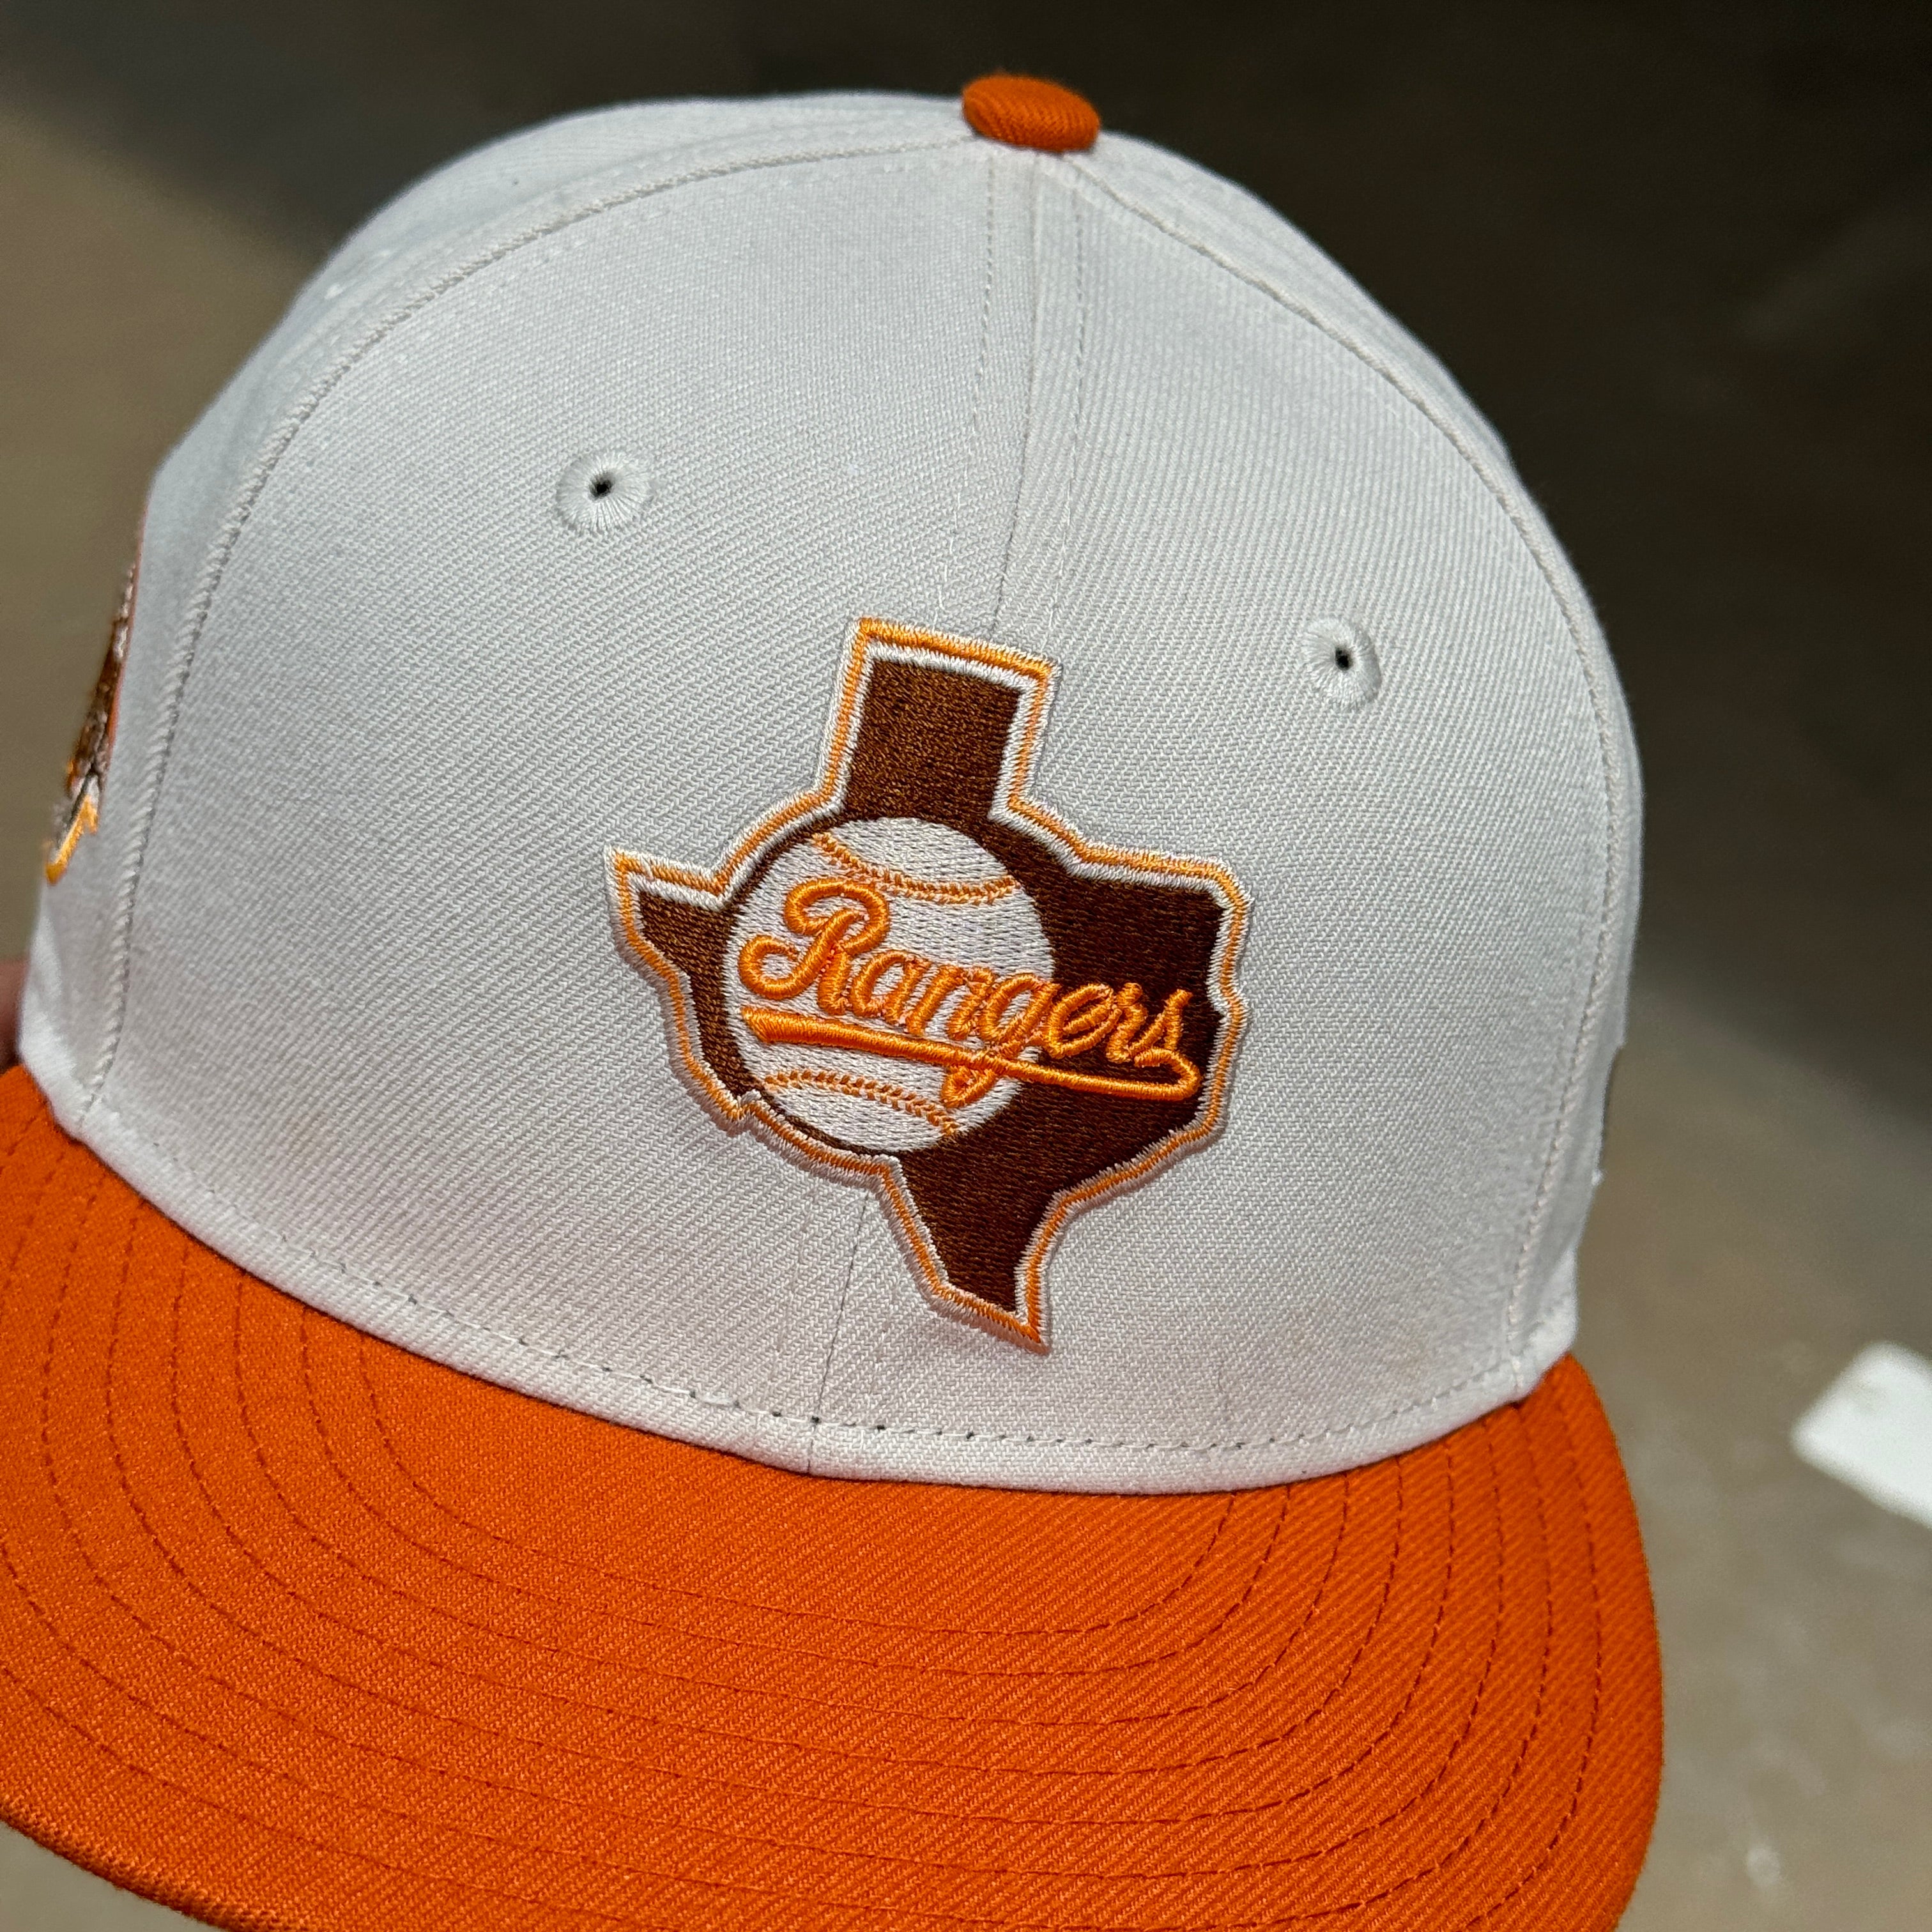 USED 1/8 Chrome Dallas Texas Rangers Arlington Stadium 59fifty New Era Fitted Hat Cap